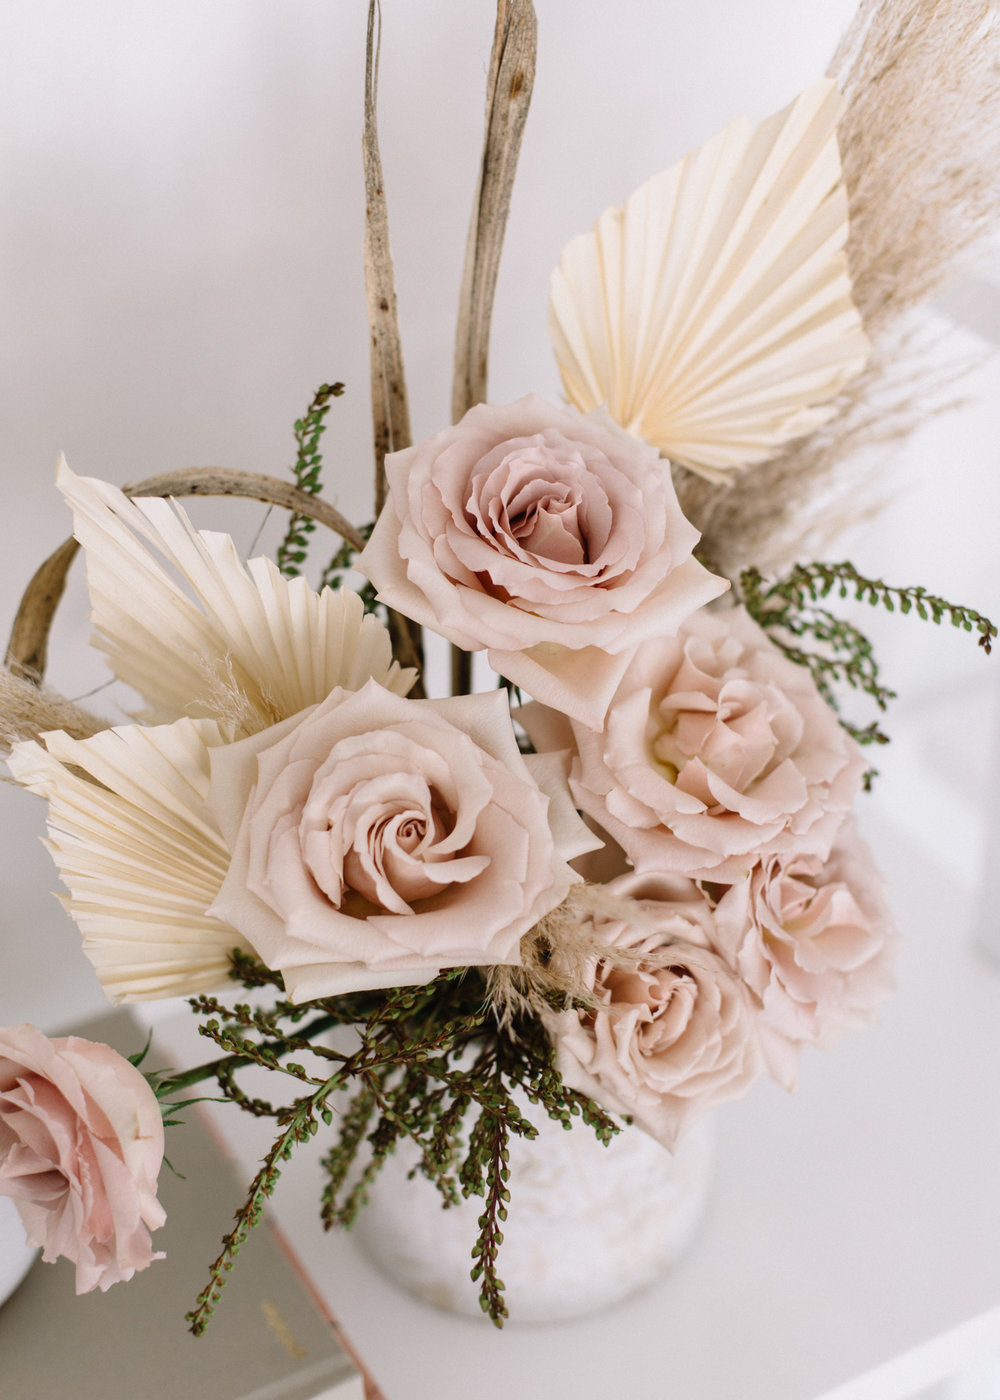 The Hottest Wedding Trend: 46 Dried Flower Ideas - Weddingomania